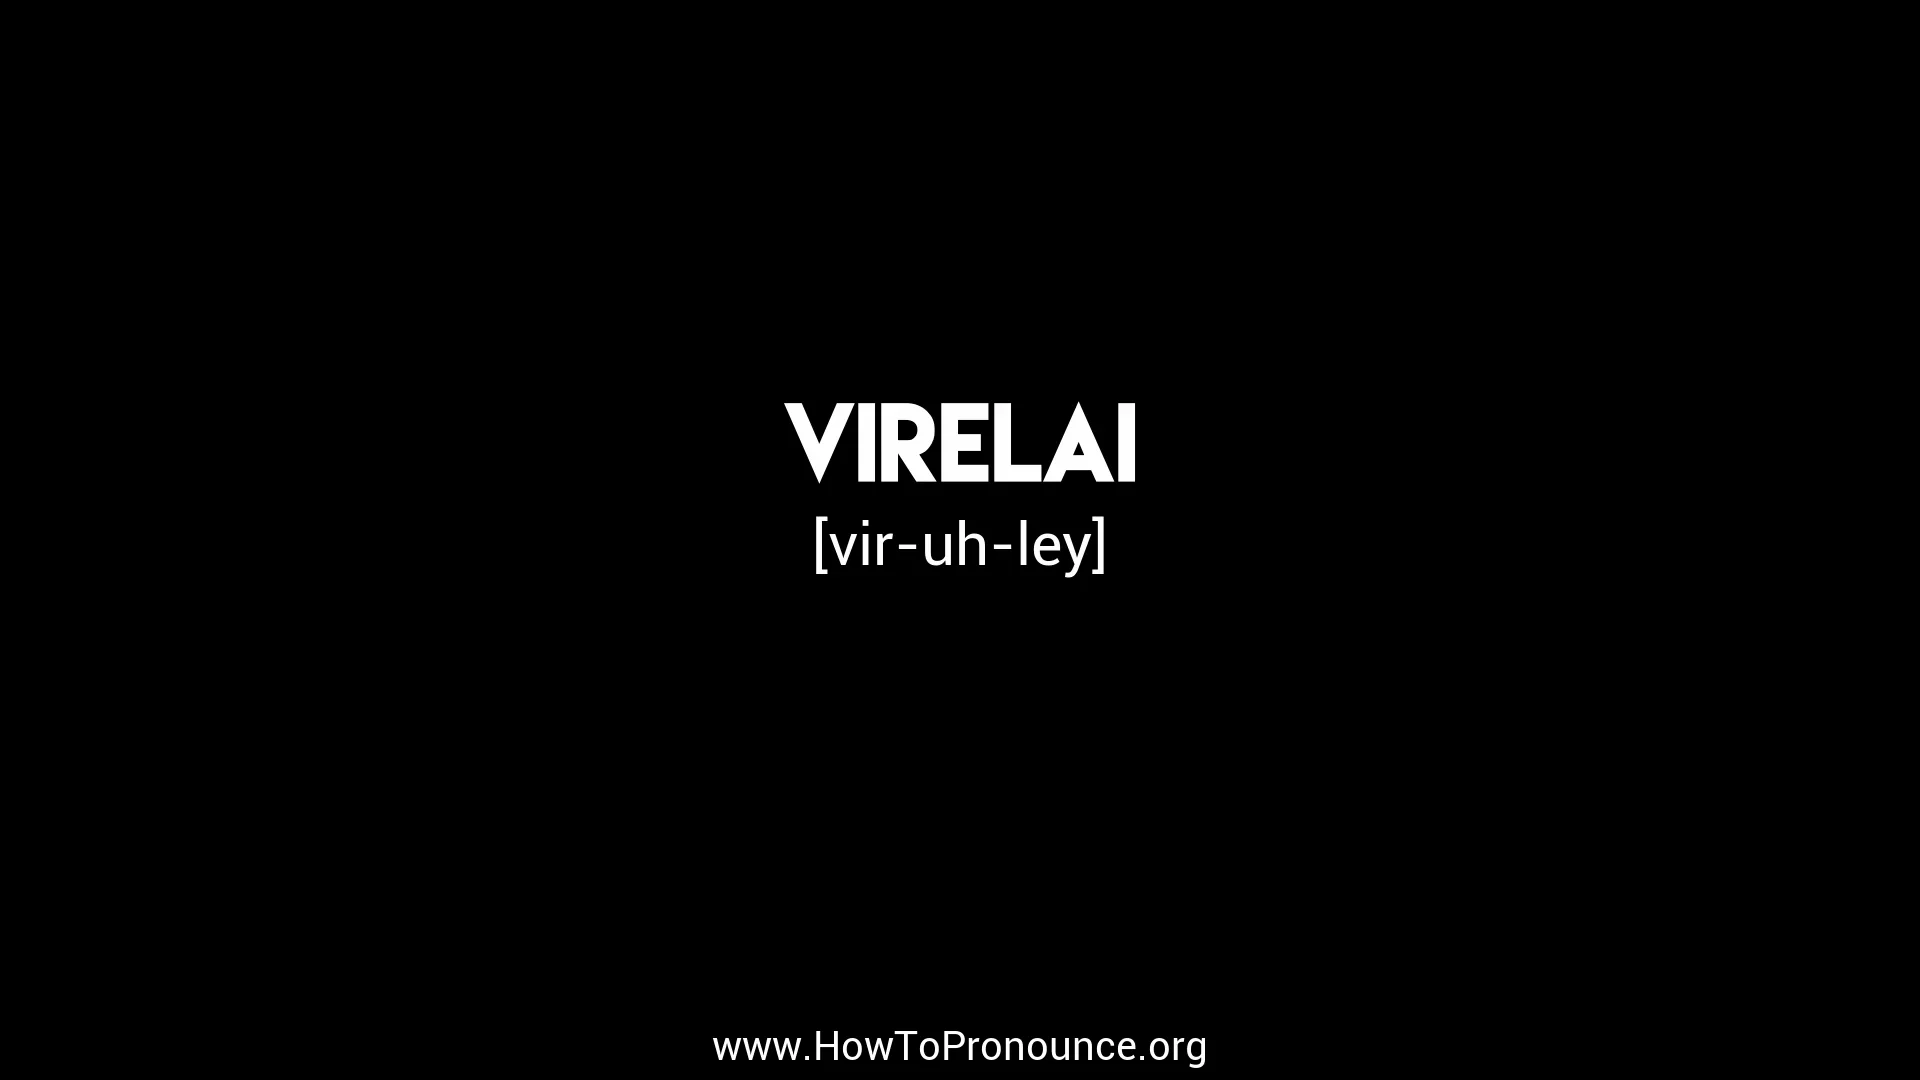 How to Pronounce virelai on Vimeo